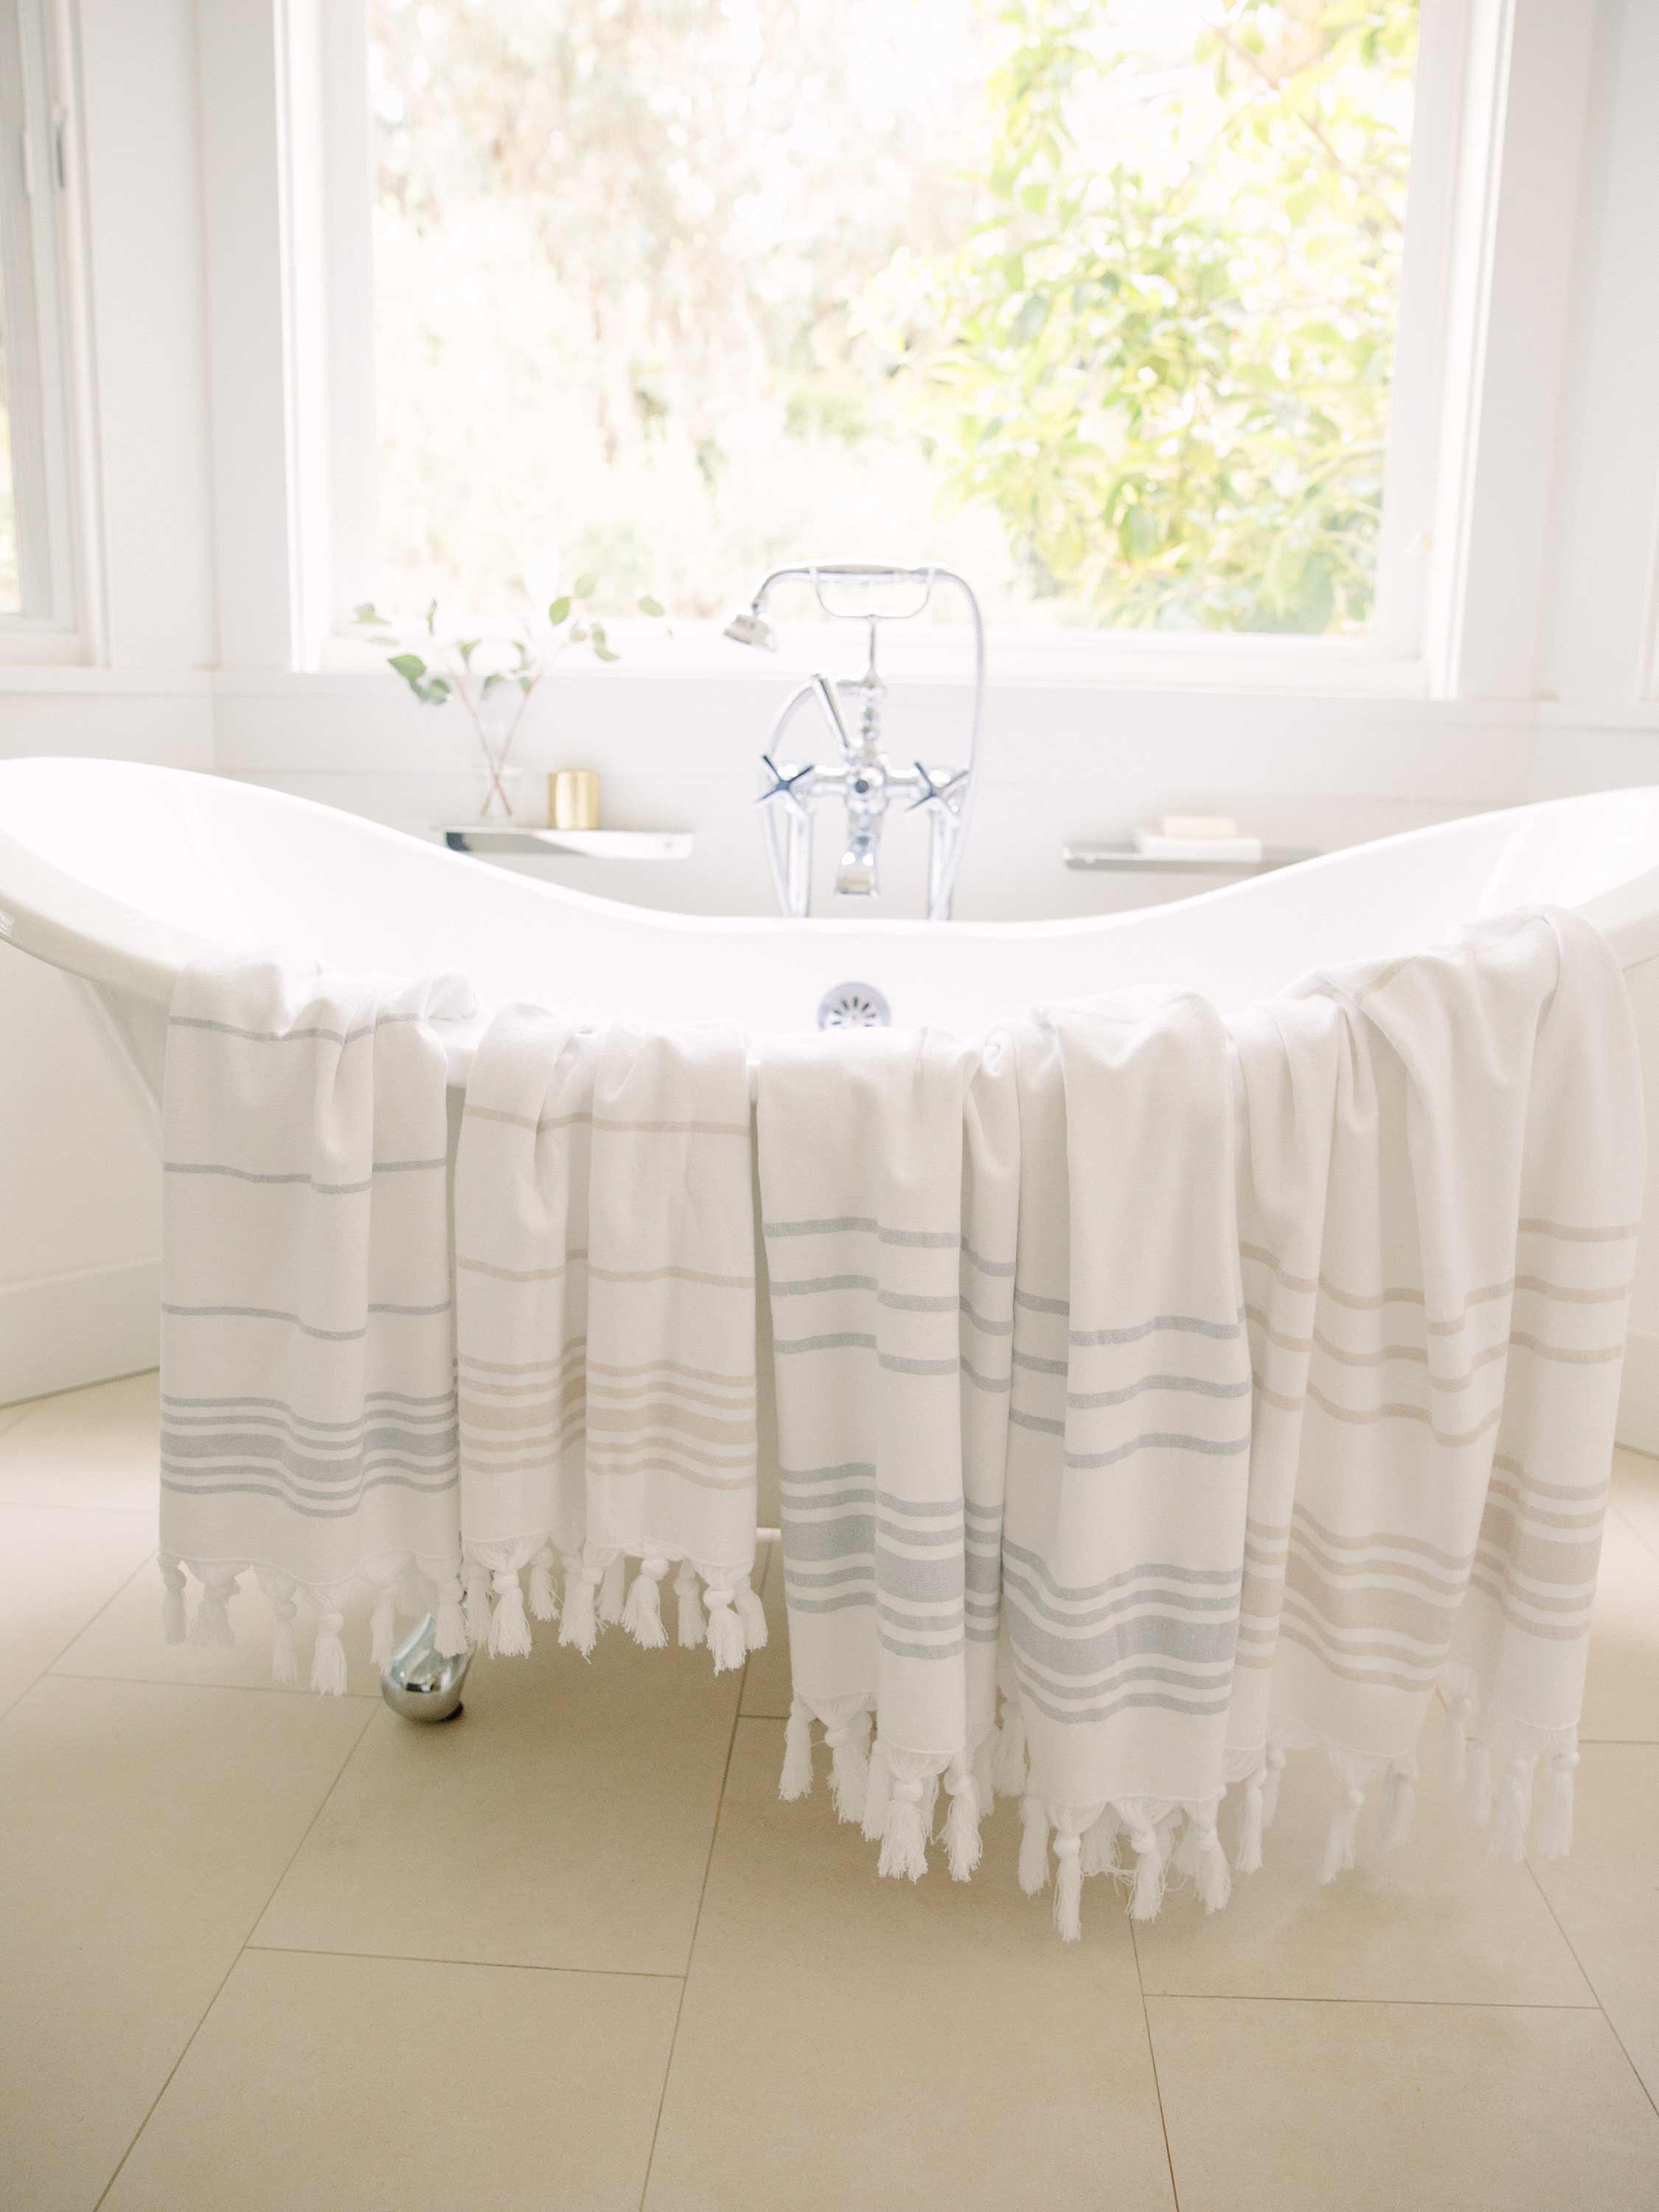  White Classic Luxury Hand Towels